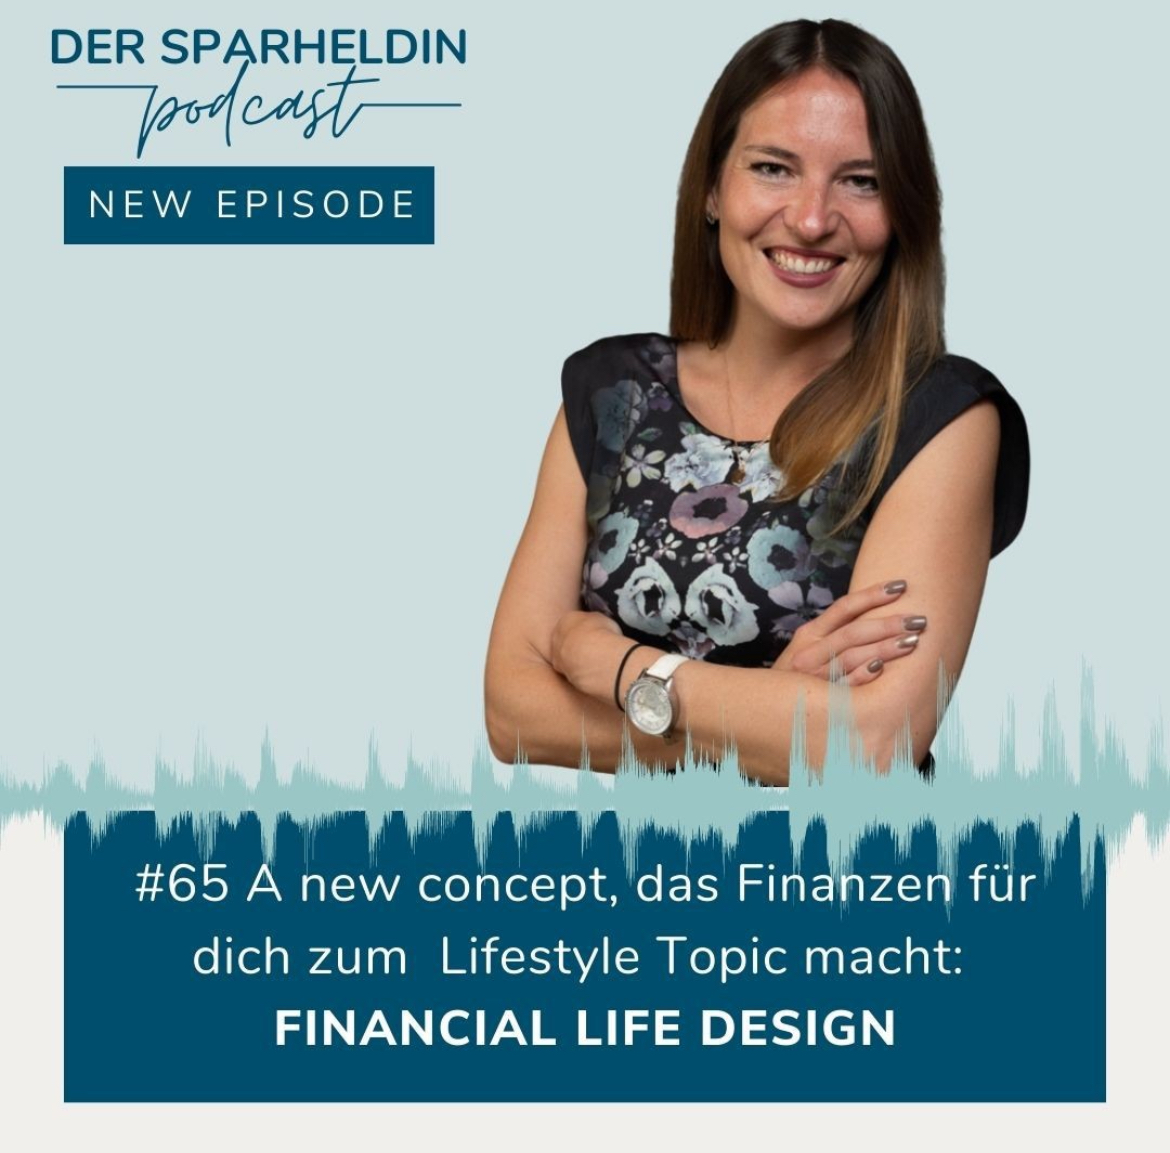 Financial Life Design